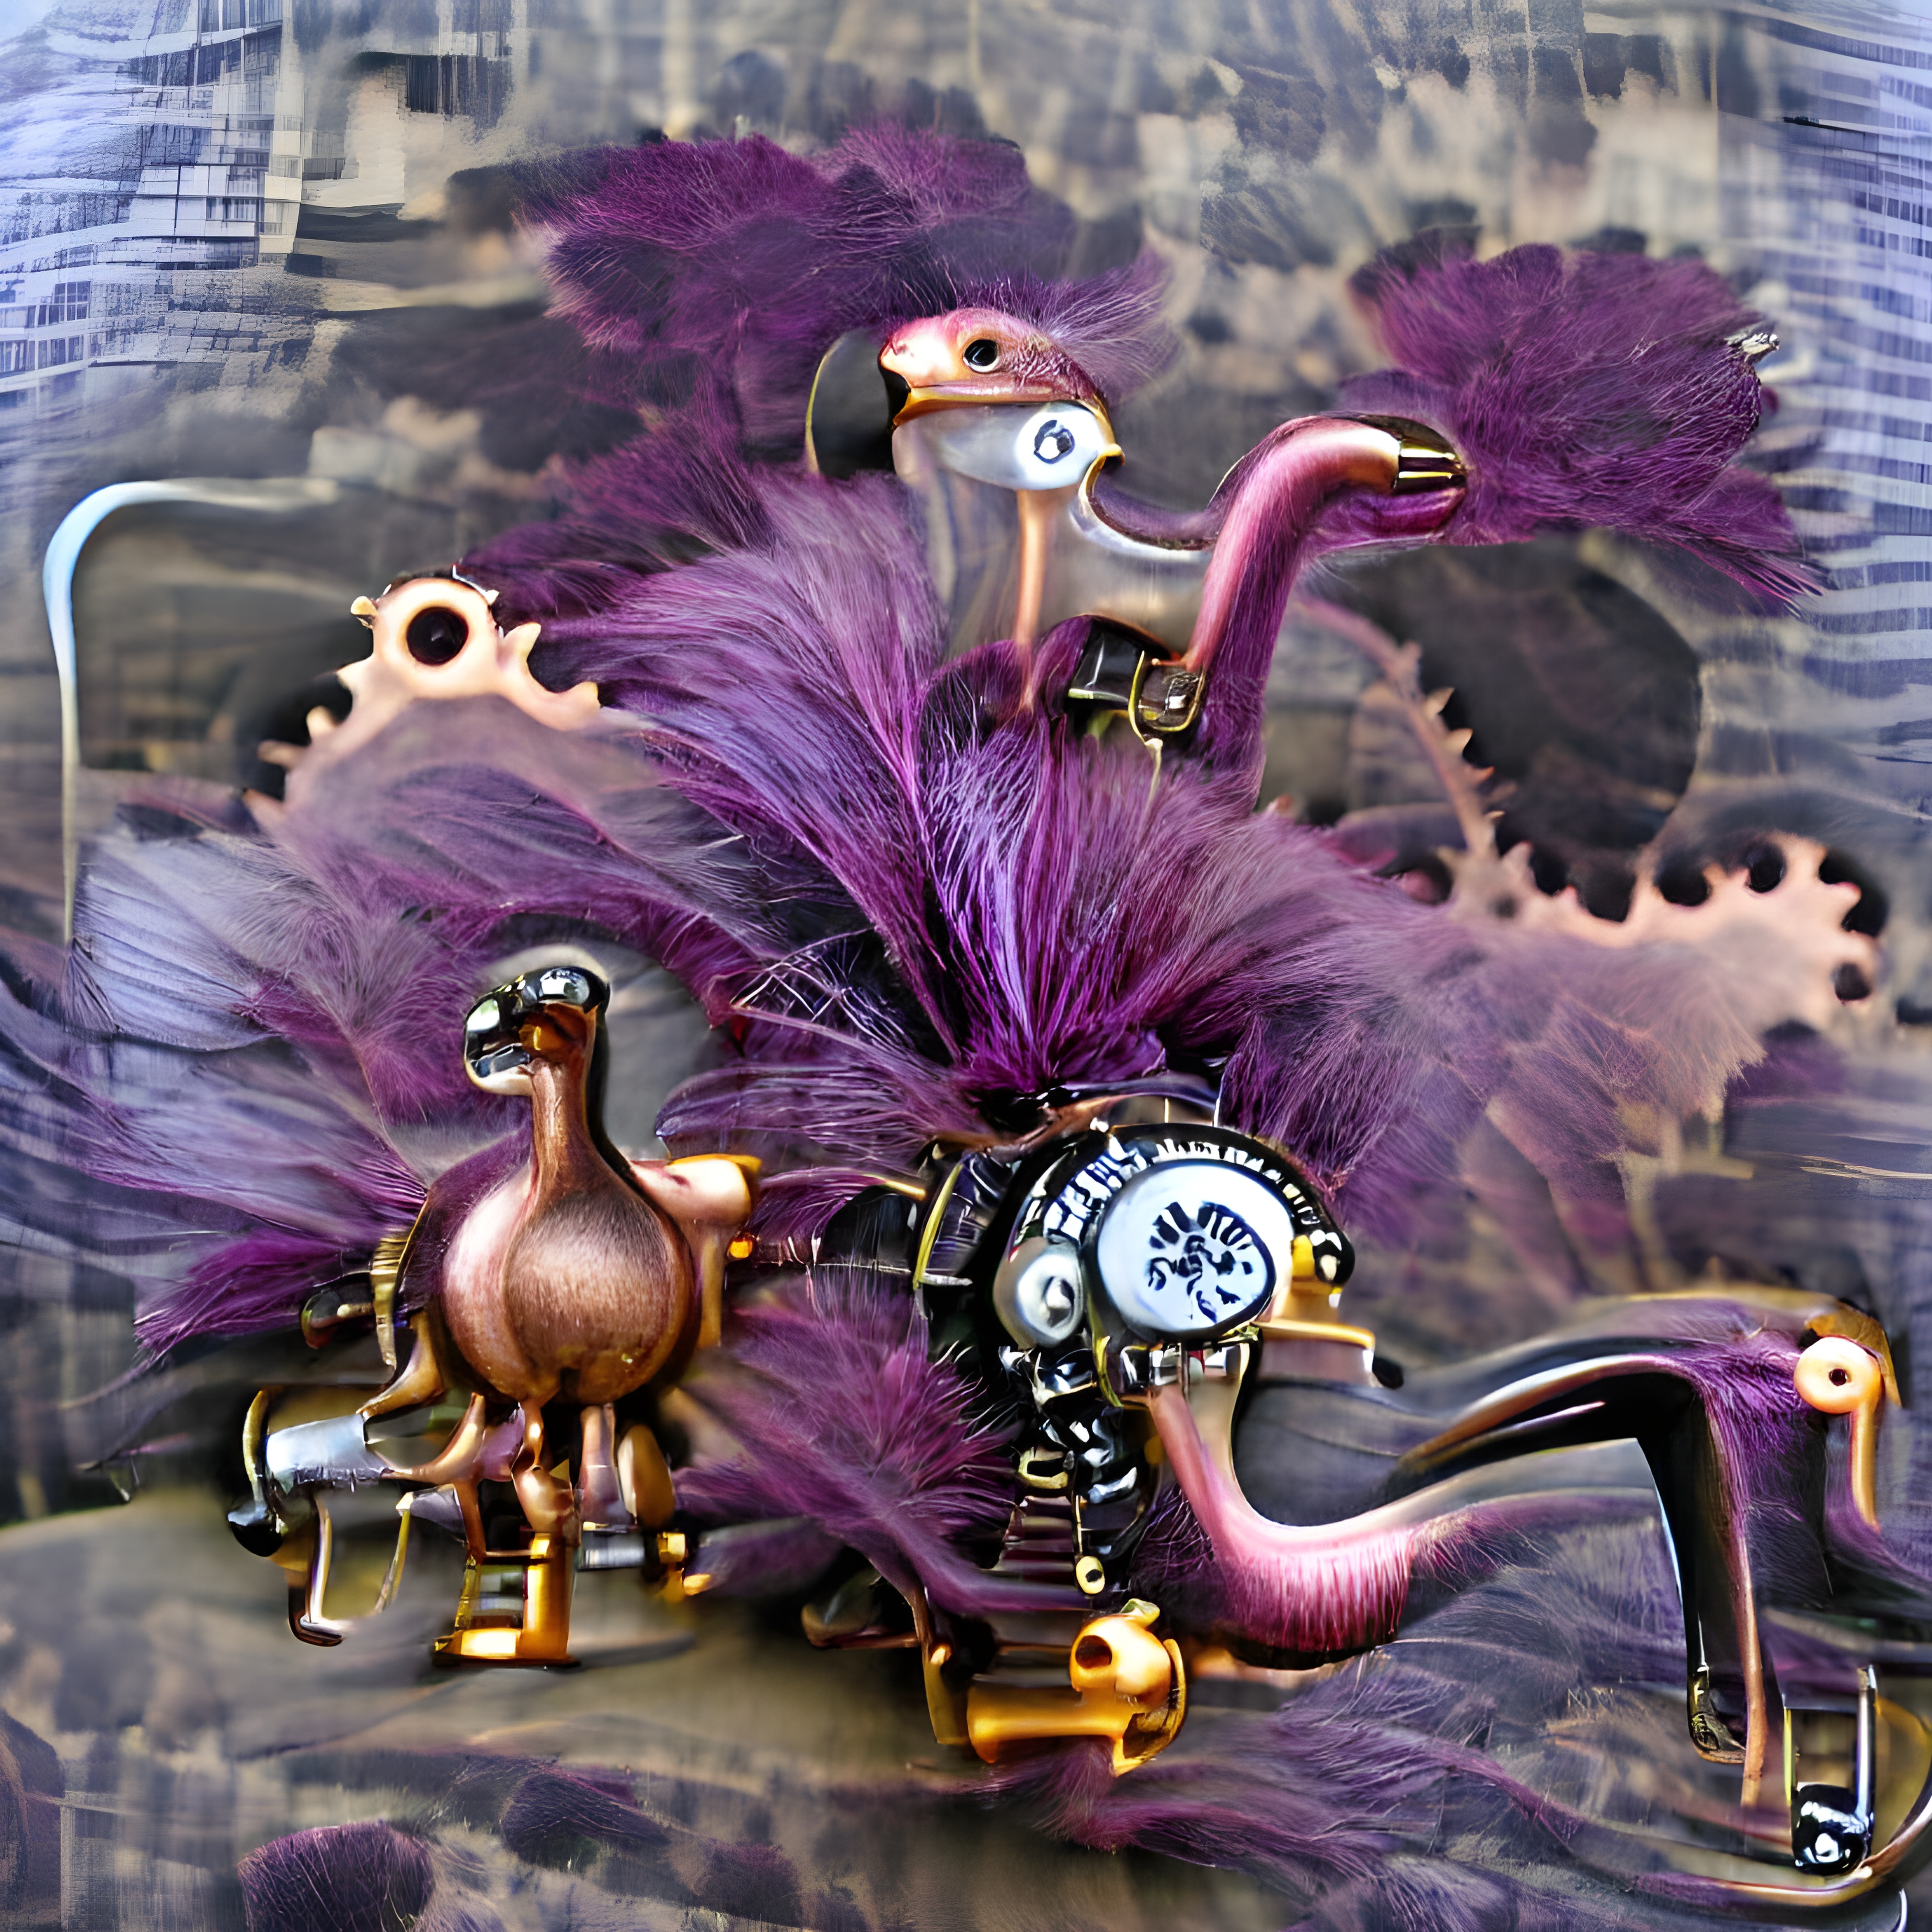 The Romantic Ostrich